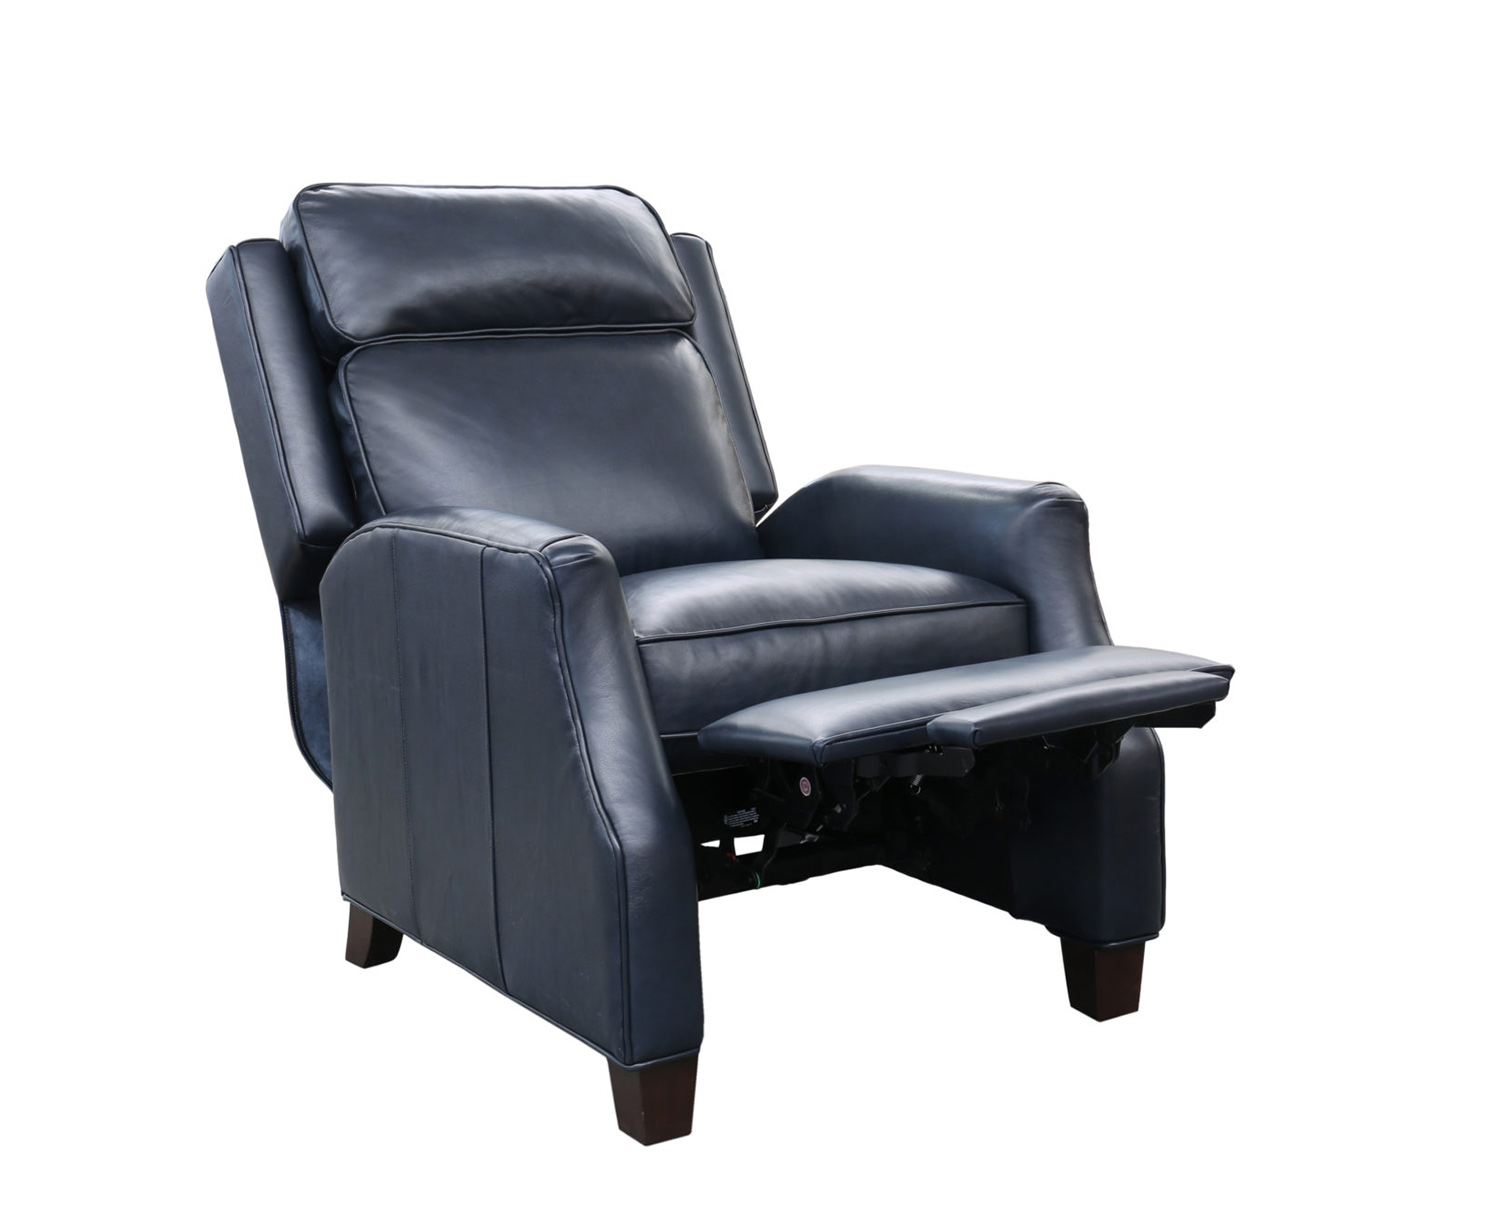 Barcalounger Nixon Recliner Chair - Shoreham Blue/all leather